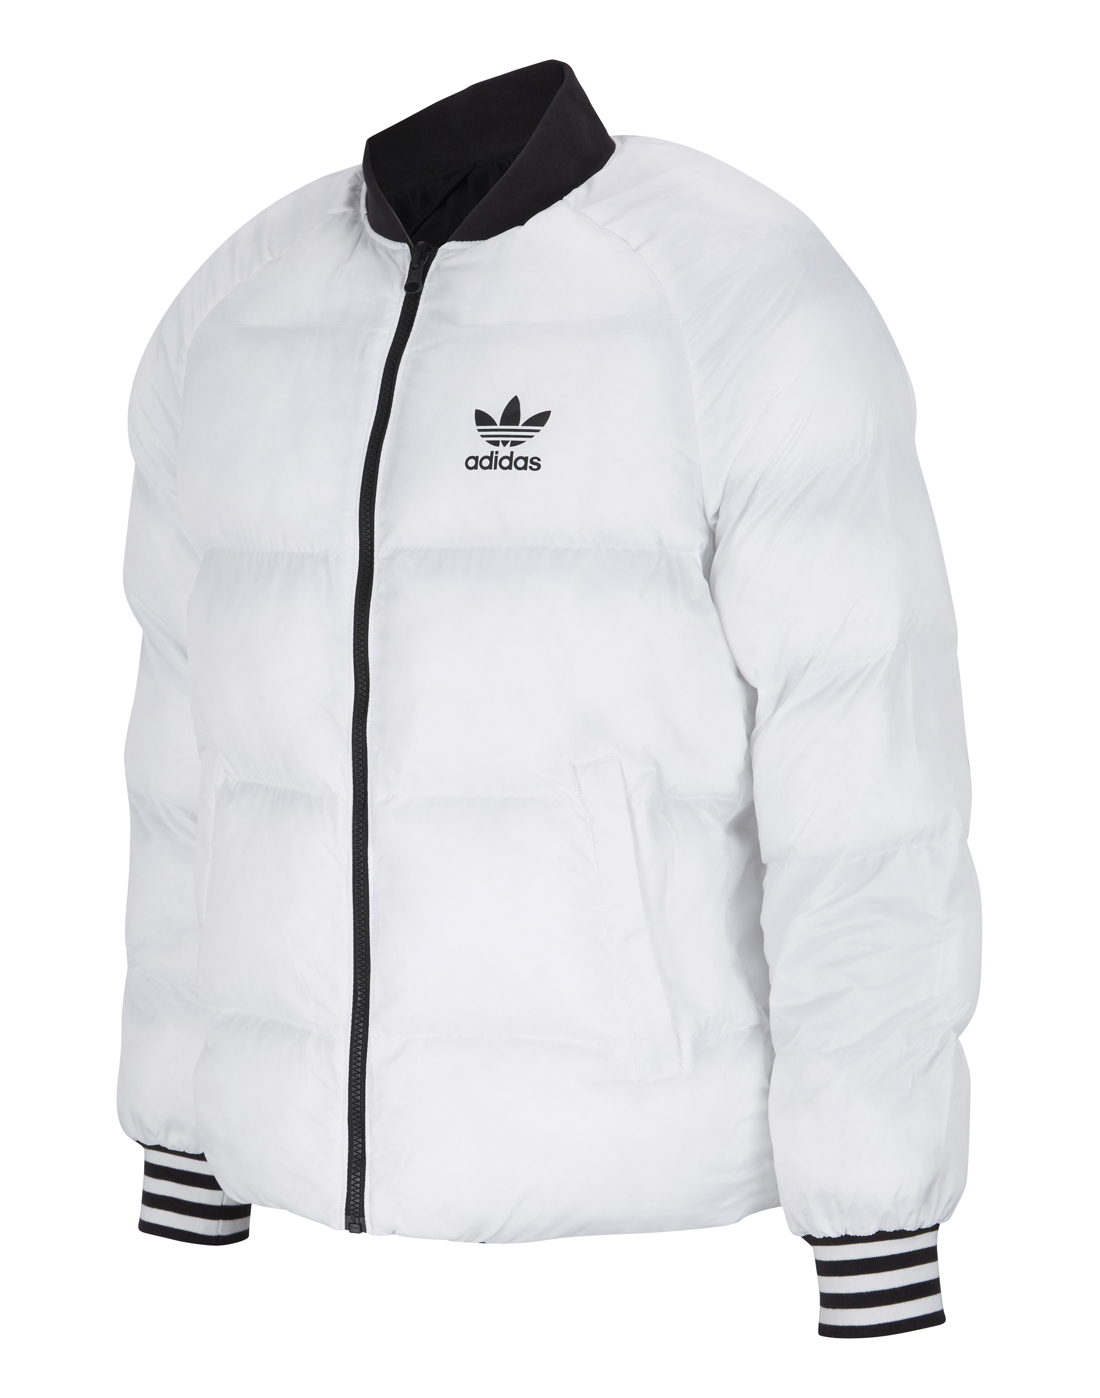 adidas black and white superstar jacket